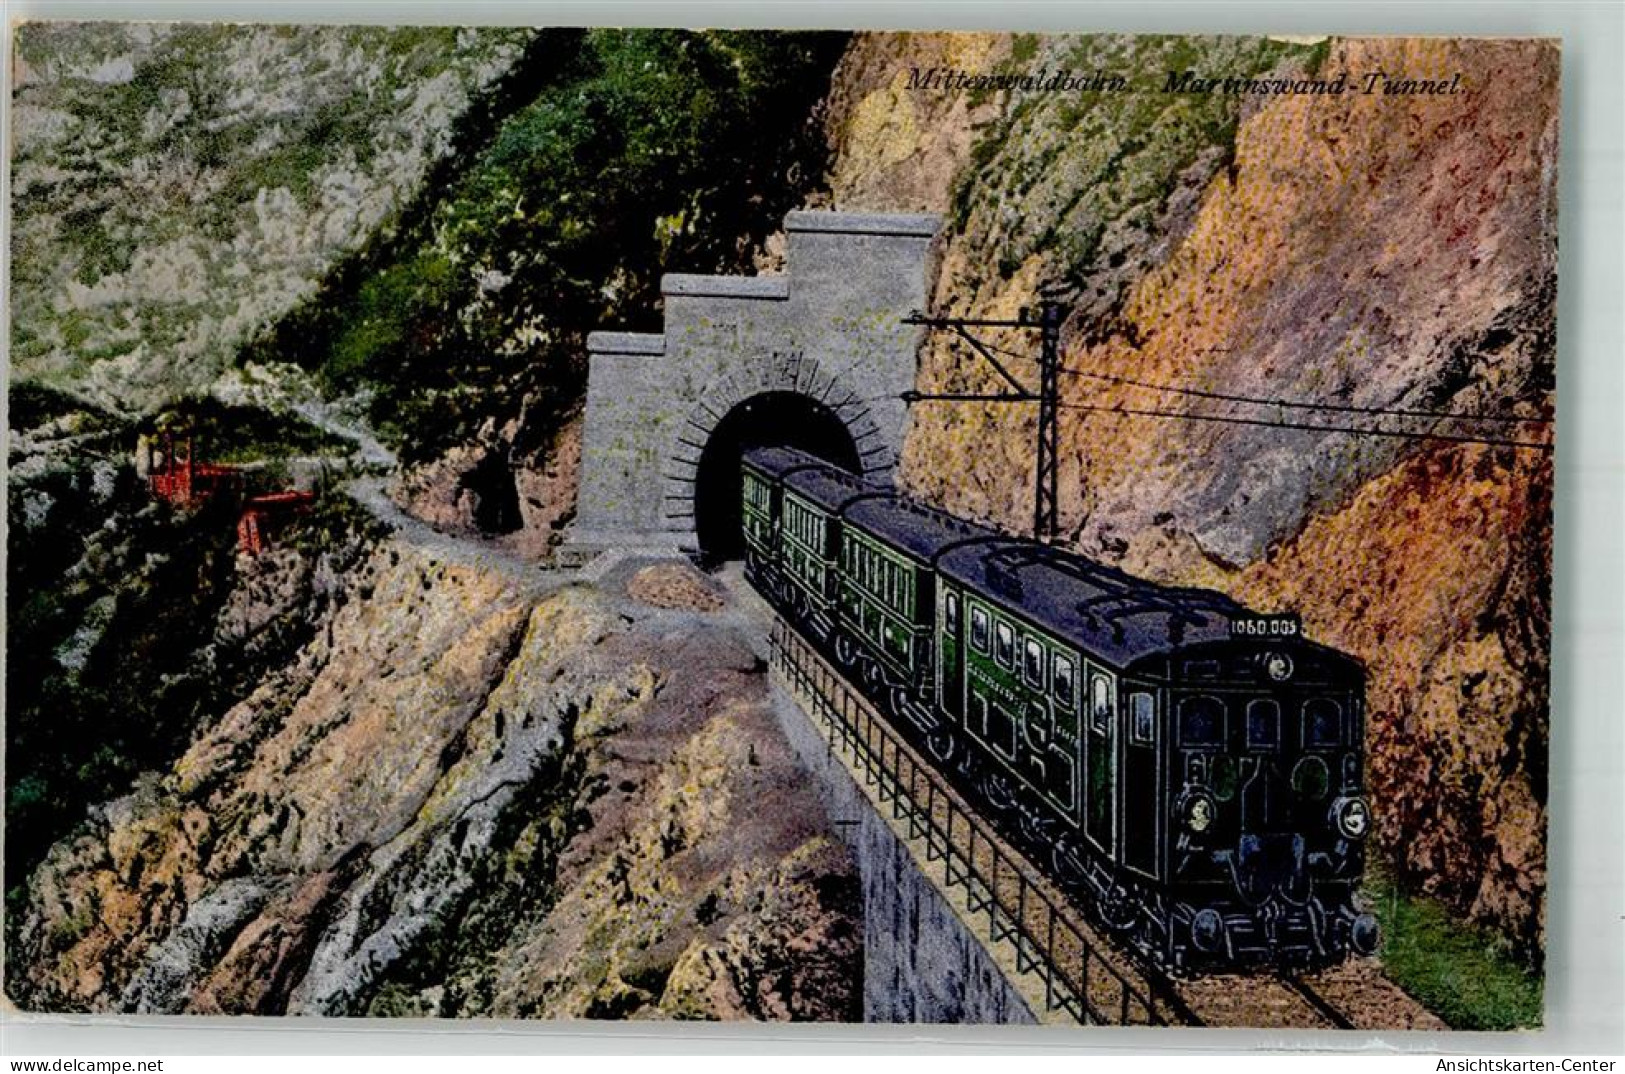 10710602 - Mittenwaldbahn Martinswand Tunnel  Verlag Purger & Co Photochromie Nr. 12617 - Funicular Railway